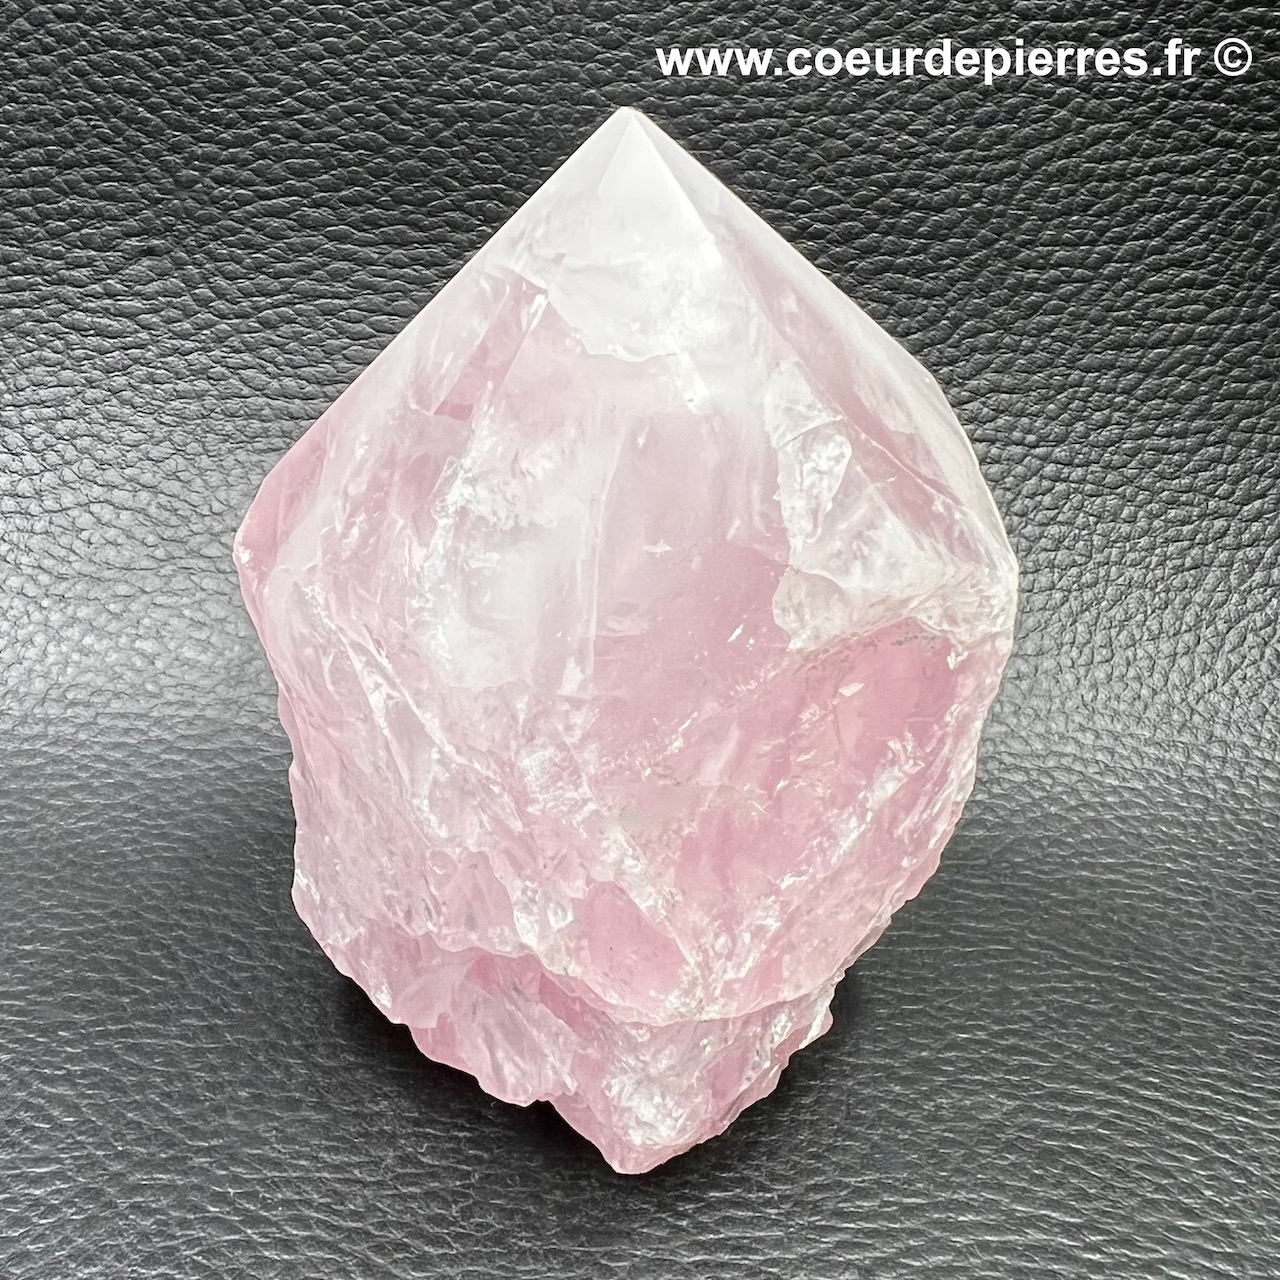 Prisme en quartz rose brut de Madagascar 0,364 kg (réf pqr5)